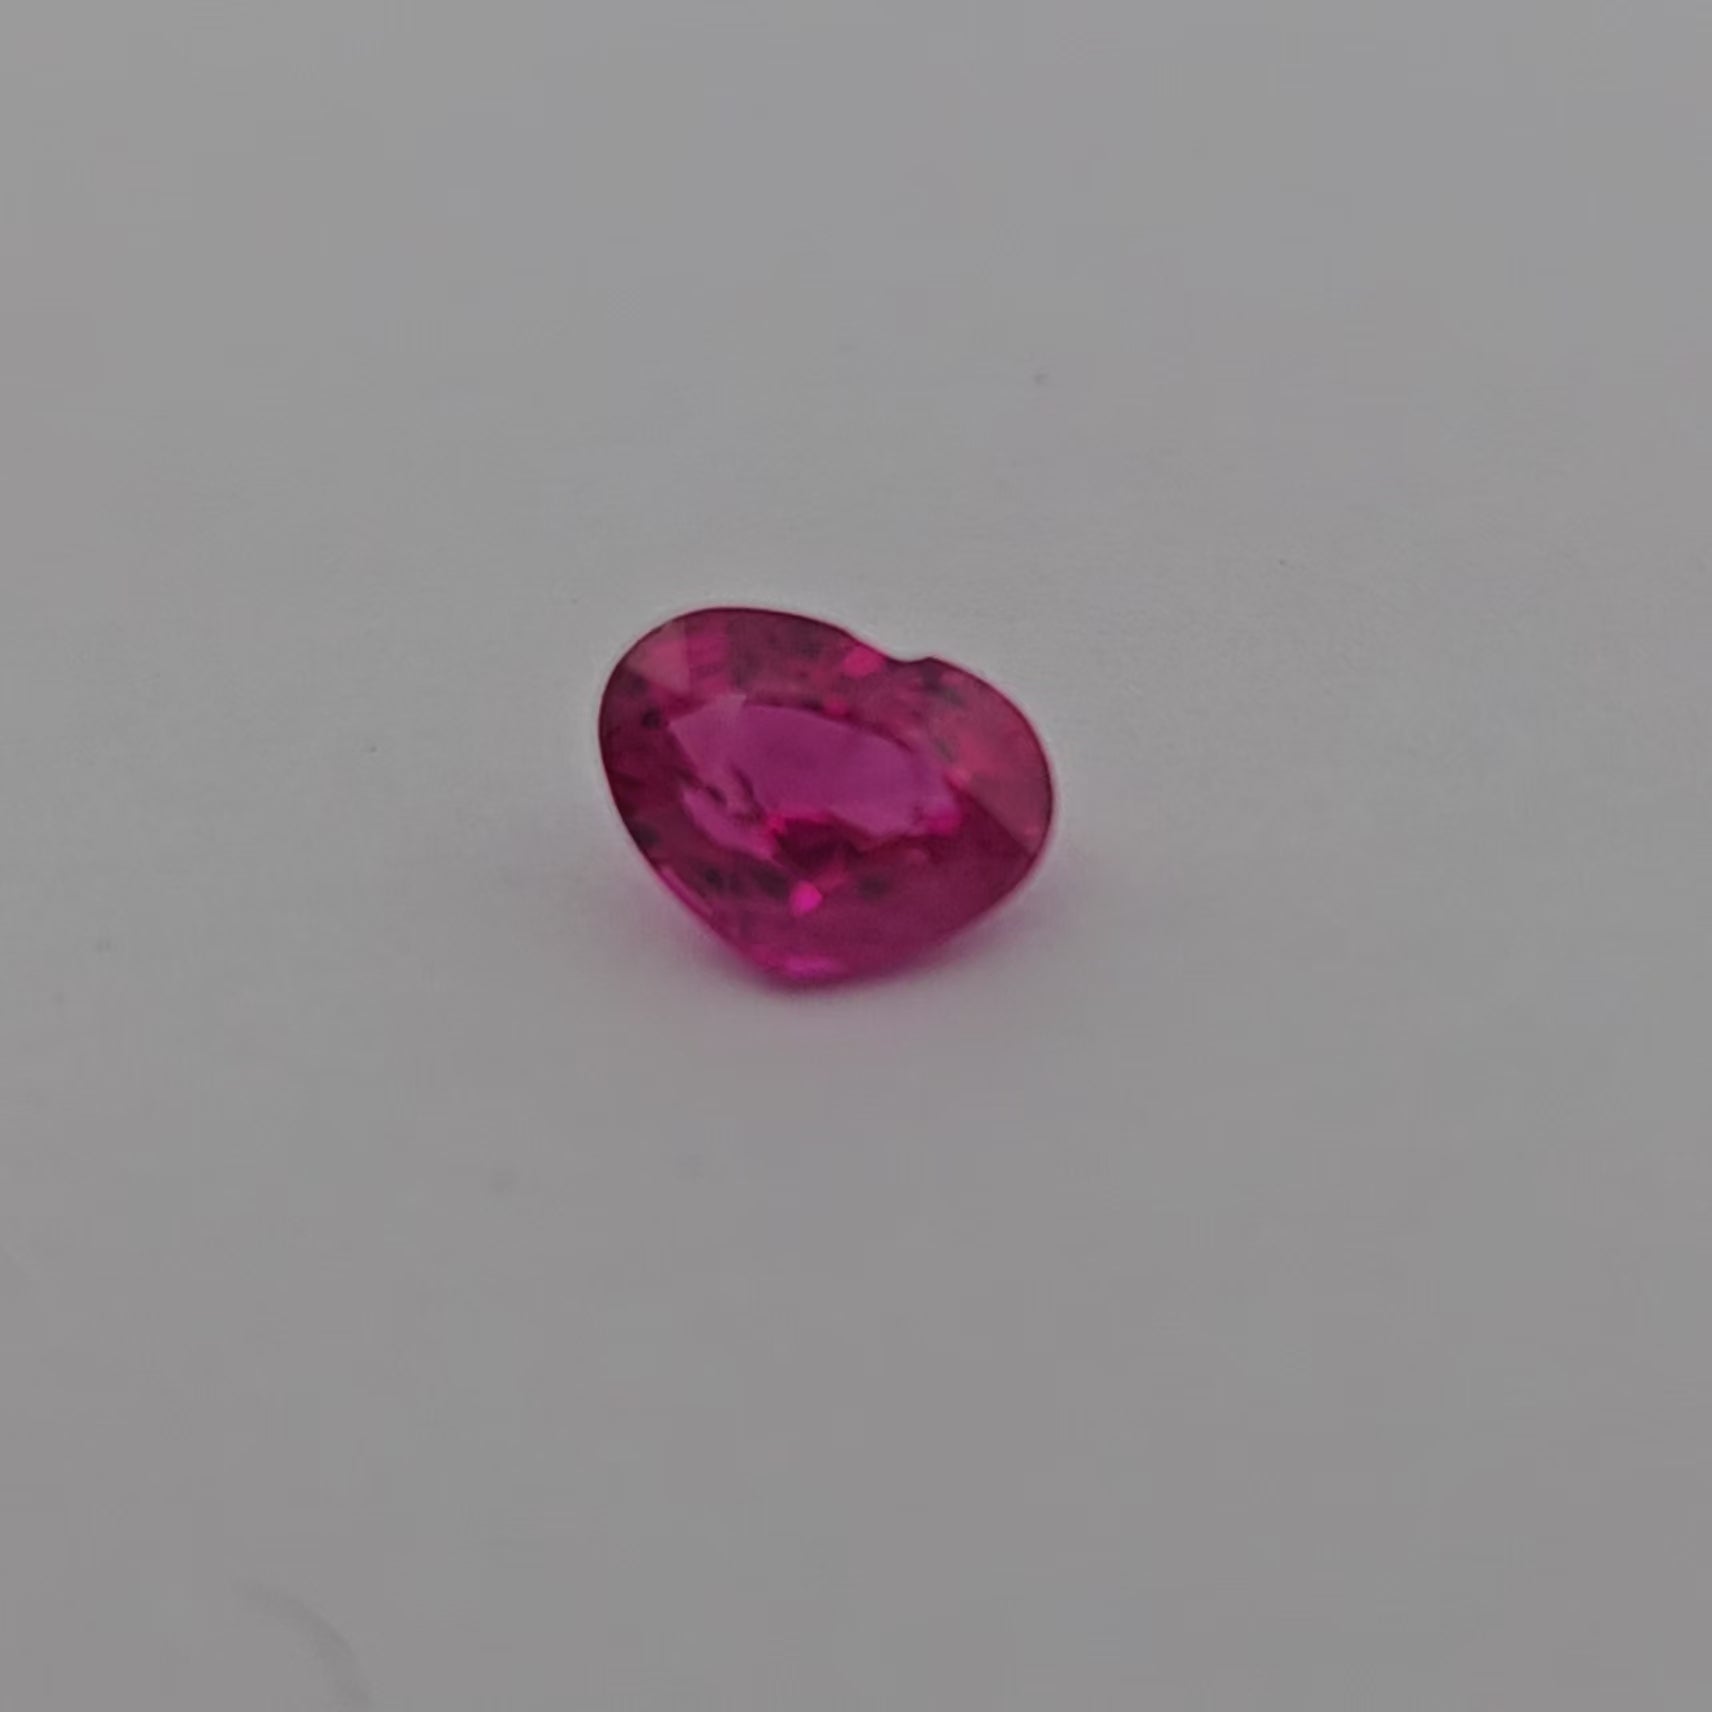 loose Natural Burmese Ruby Manik Stone 0.92 Carats Heart Shape